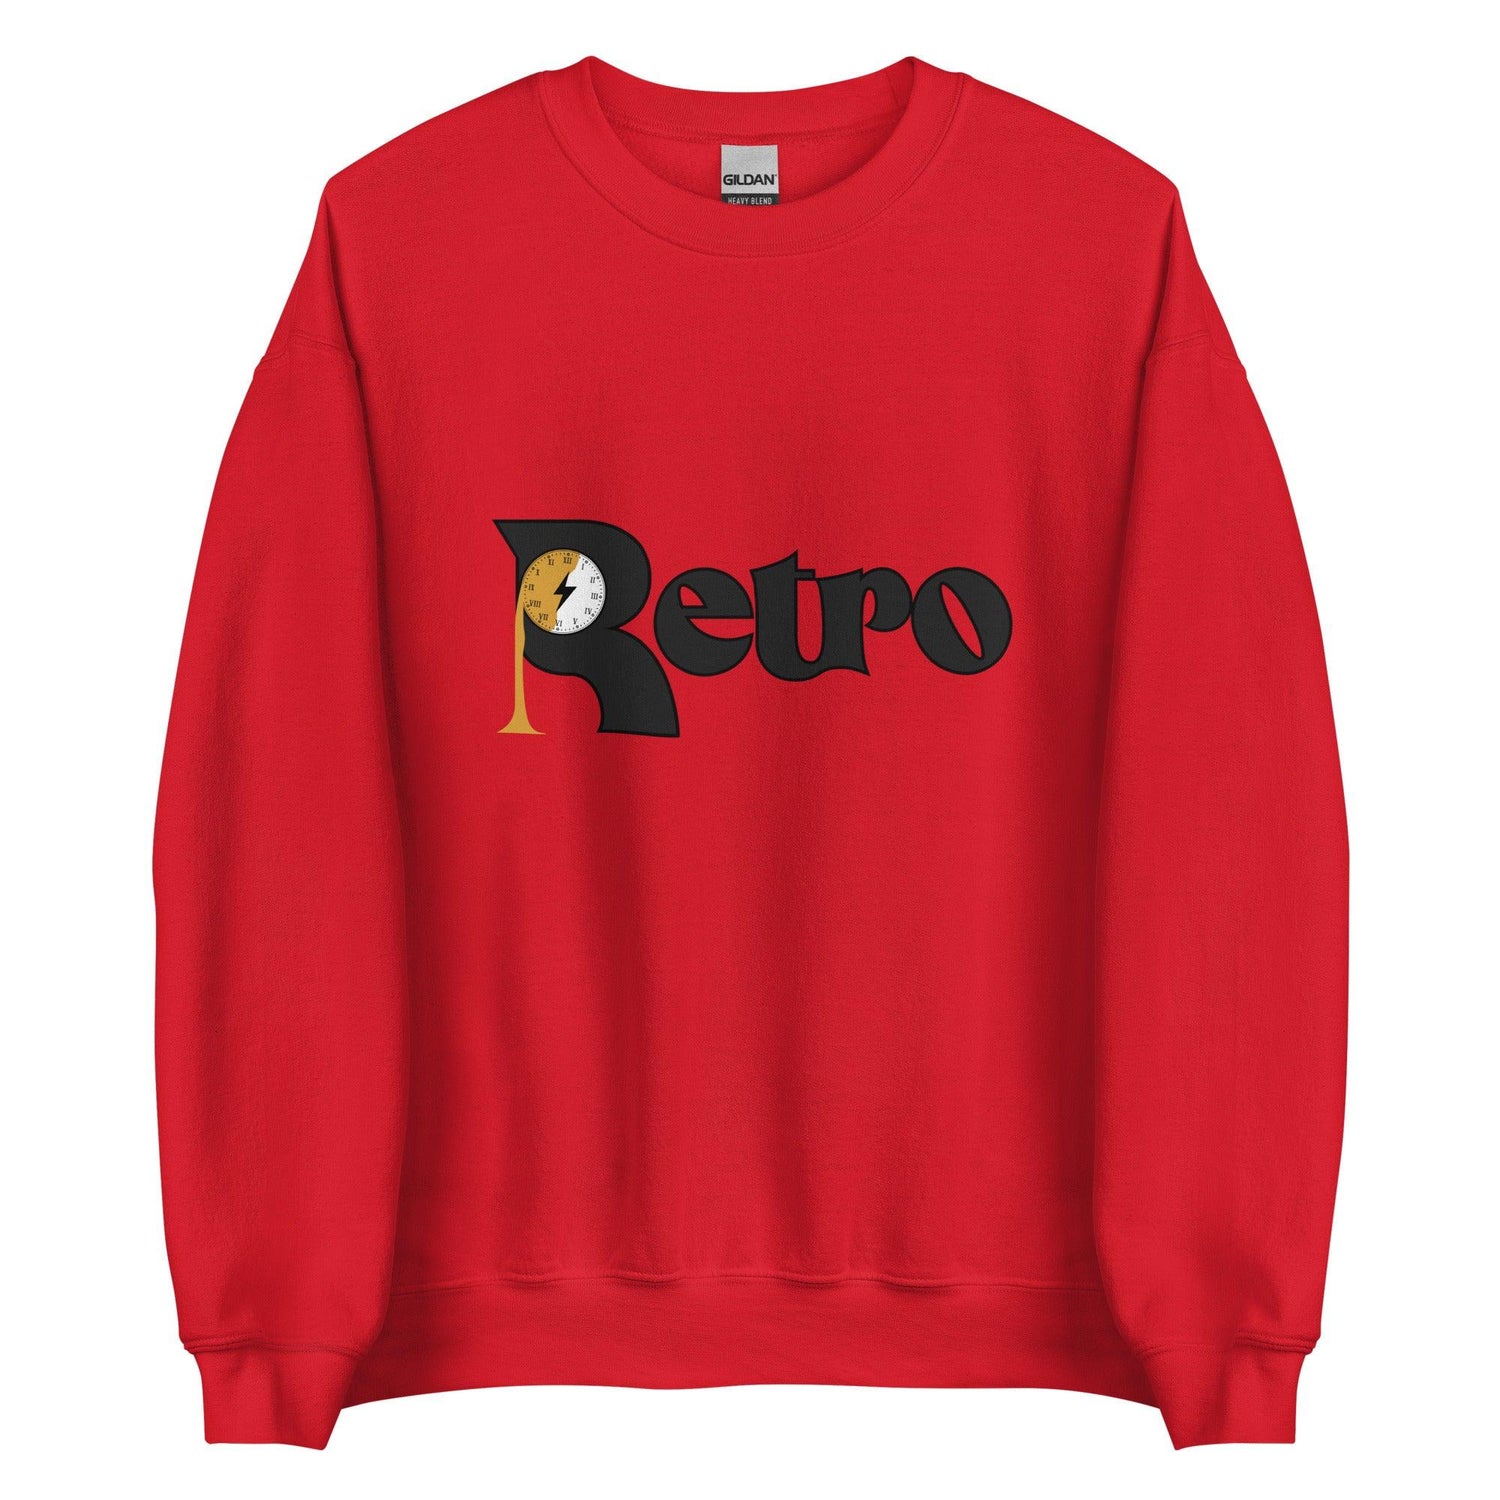 Joshua Roberts "Retro" Sweatshirt - Fan Arch